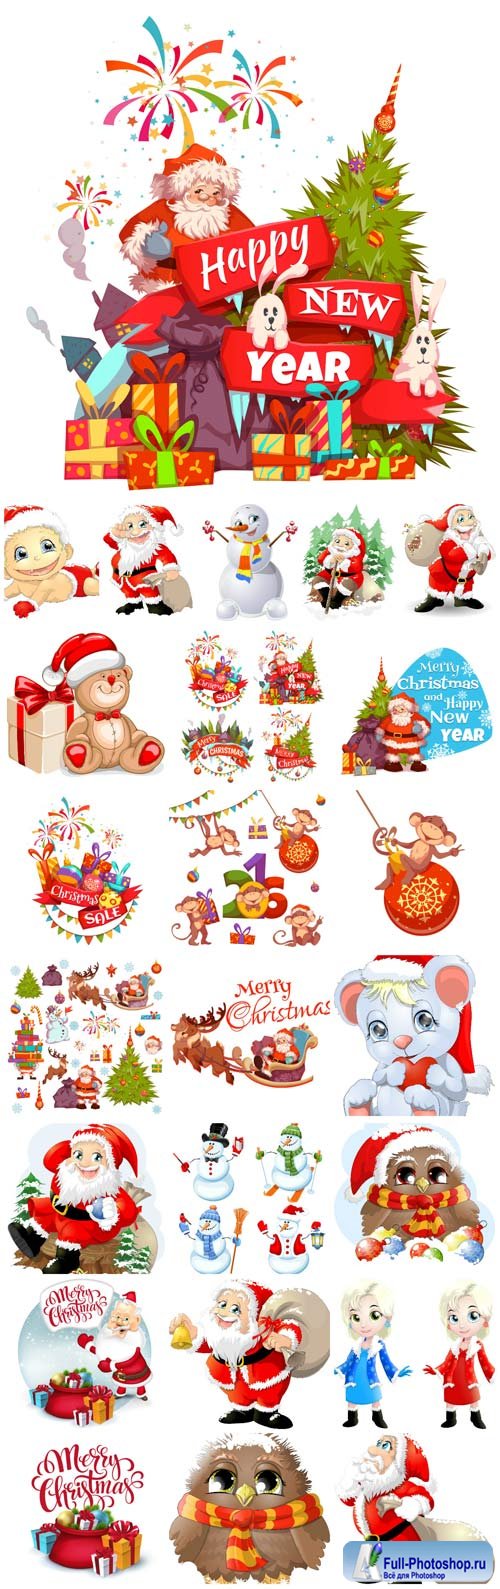 Merry Christmas, New Year vector, Santa Claus, Christmas tree, garland, winter